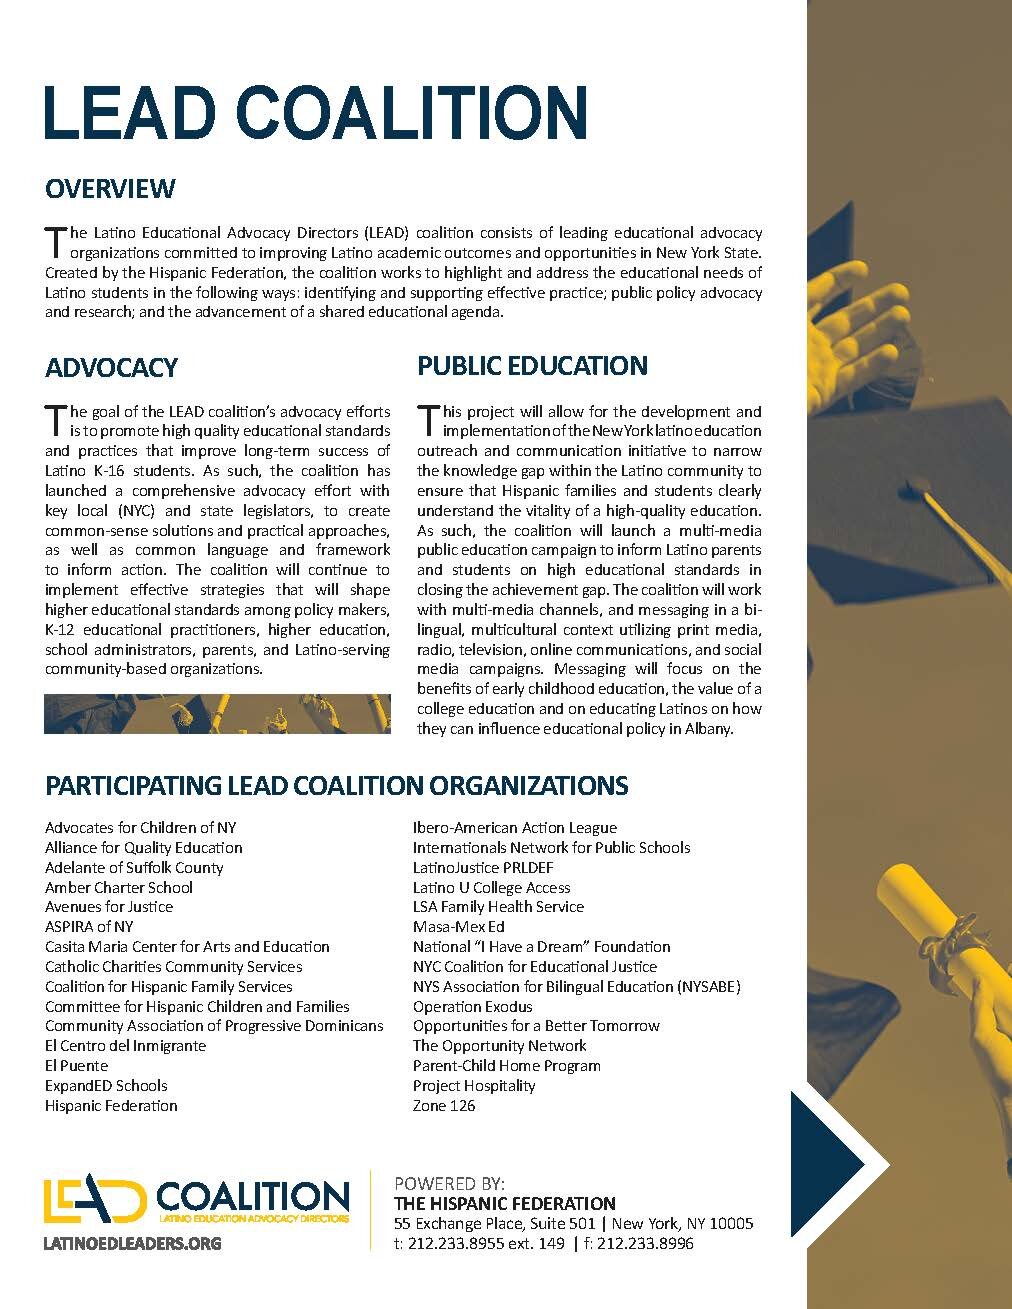 LEAD Coalition Information Sheet